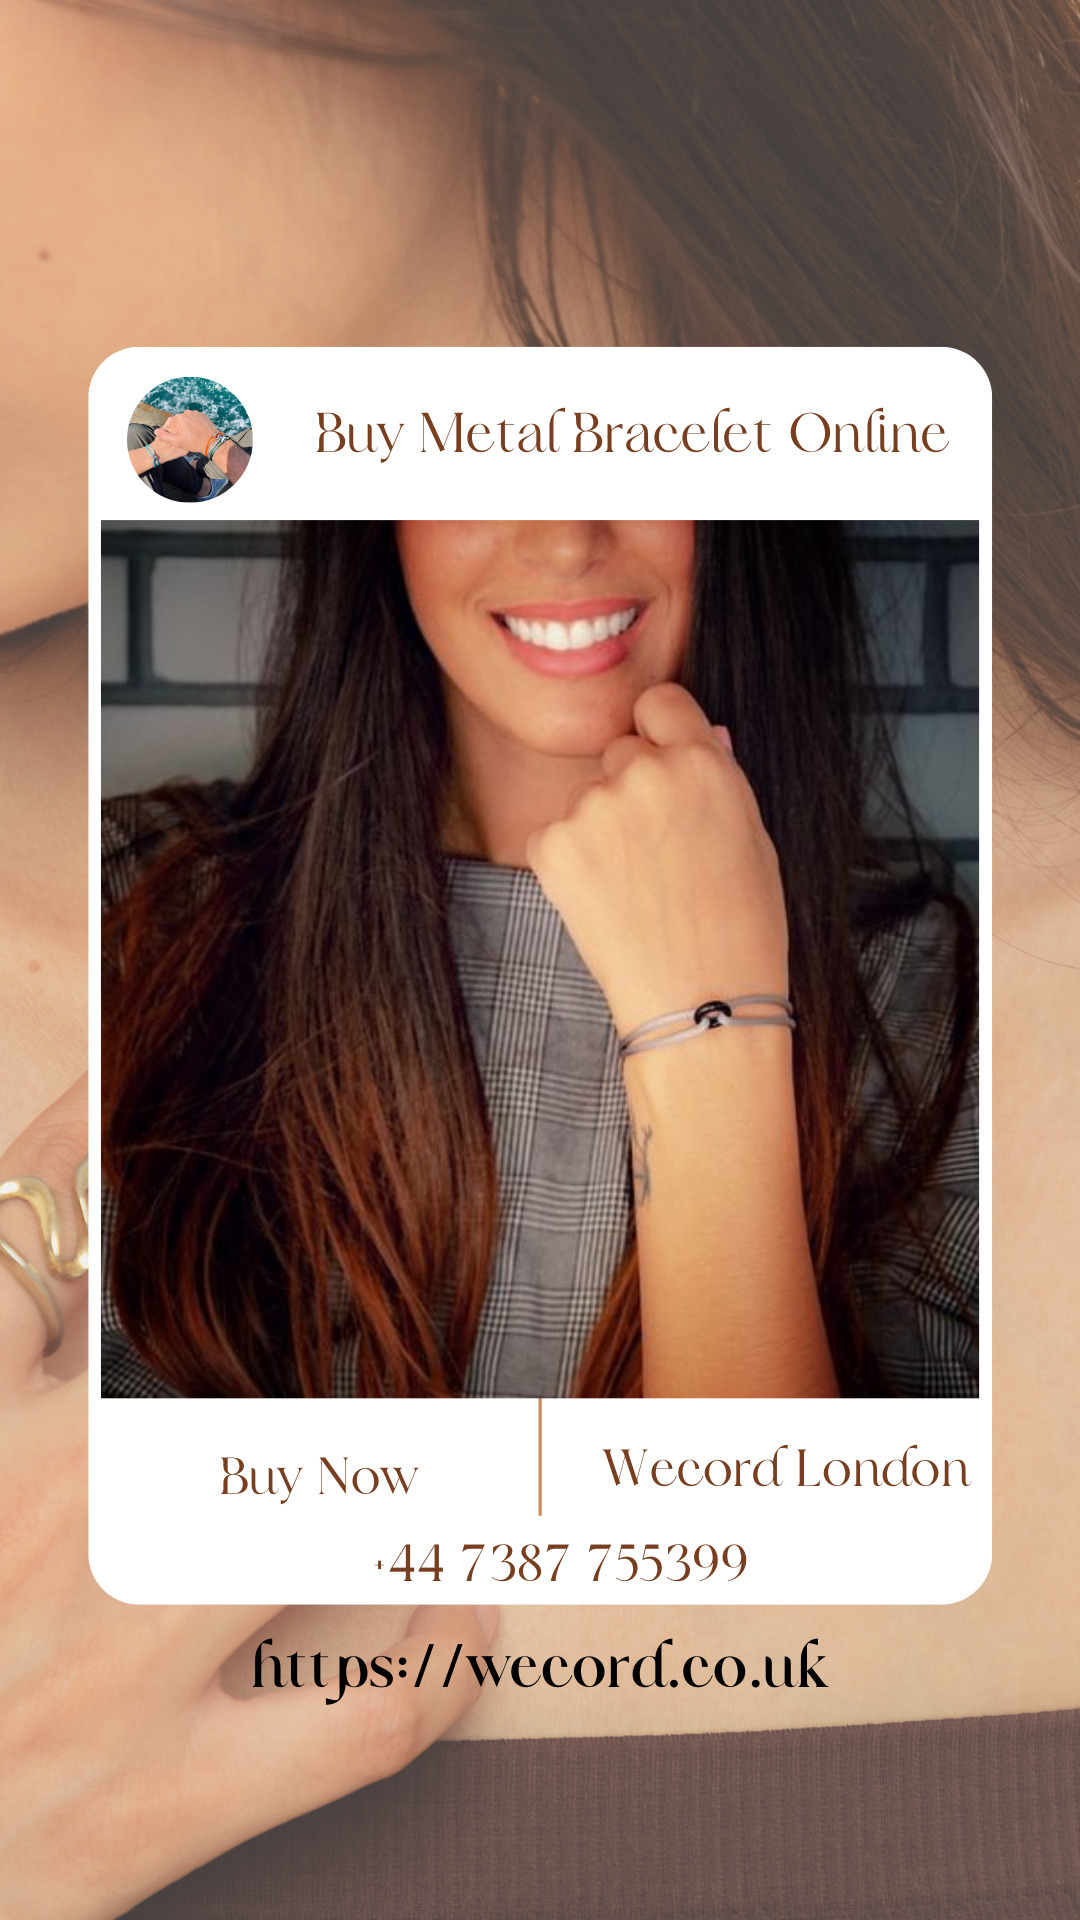 Buy Metal Bracelet Online - Wecord London	